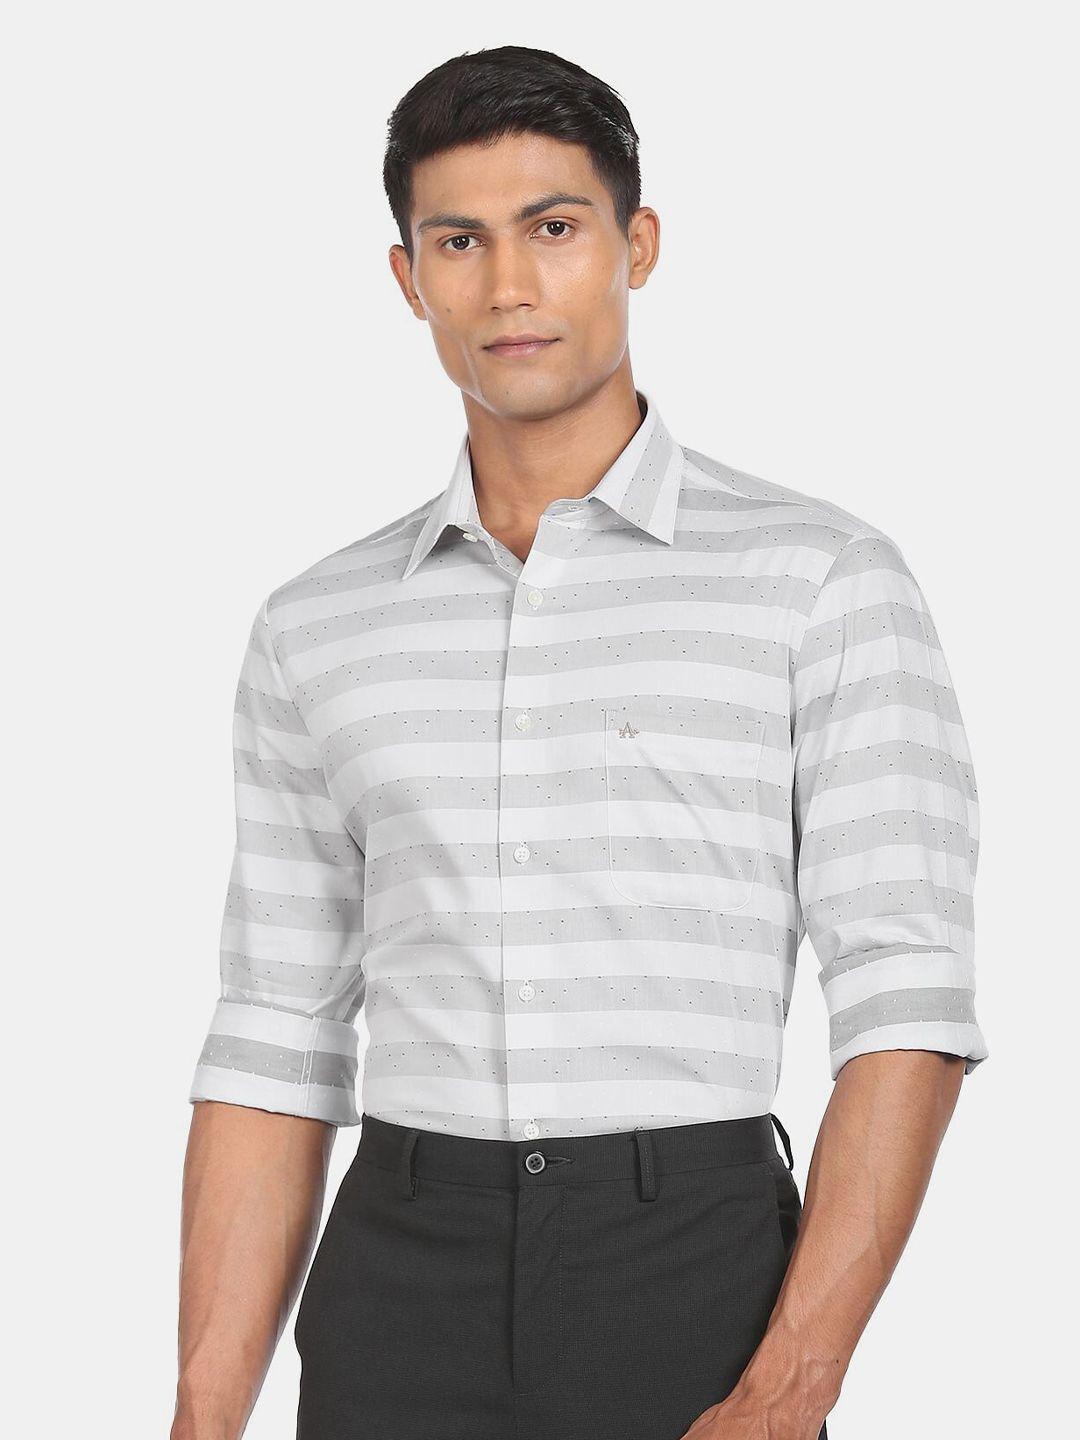 arrow men off white & grey horizontal striped cotton formal shirt